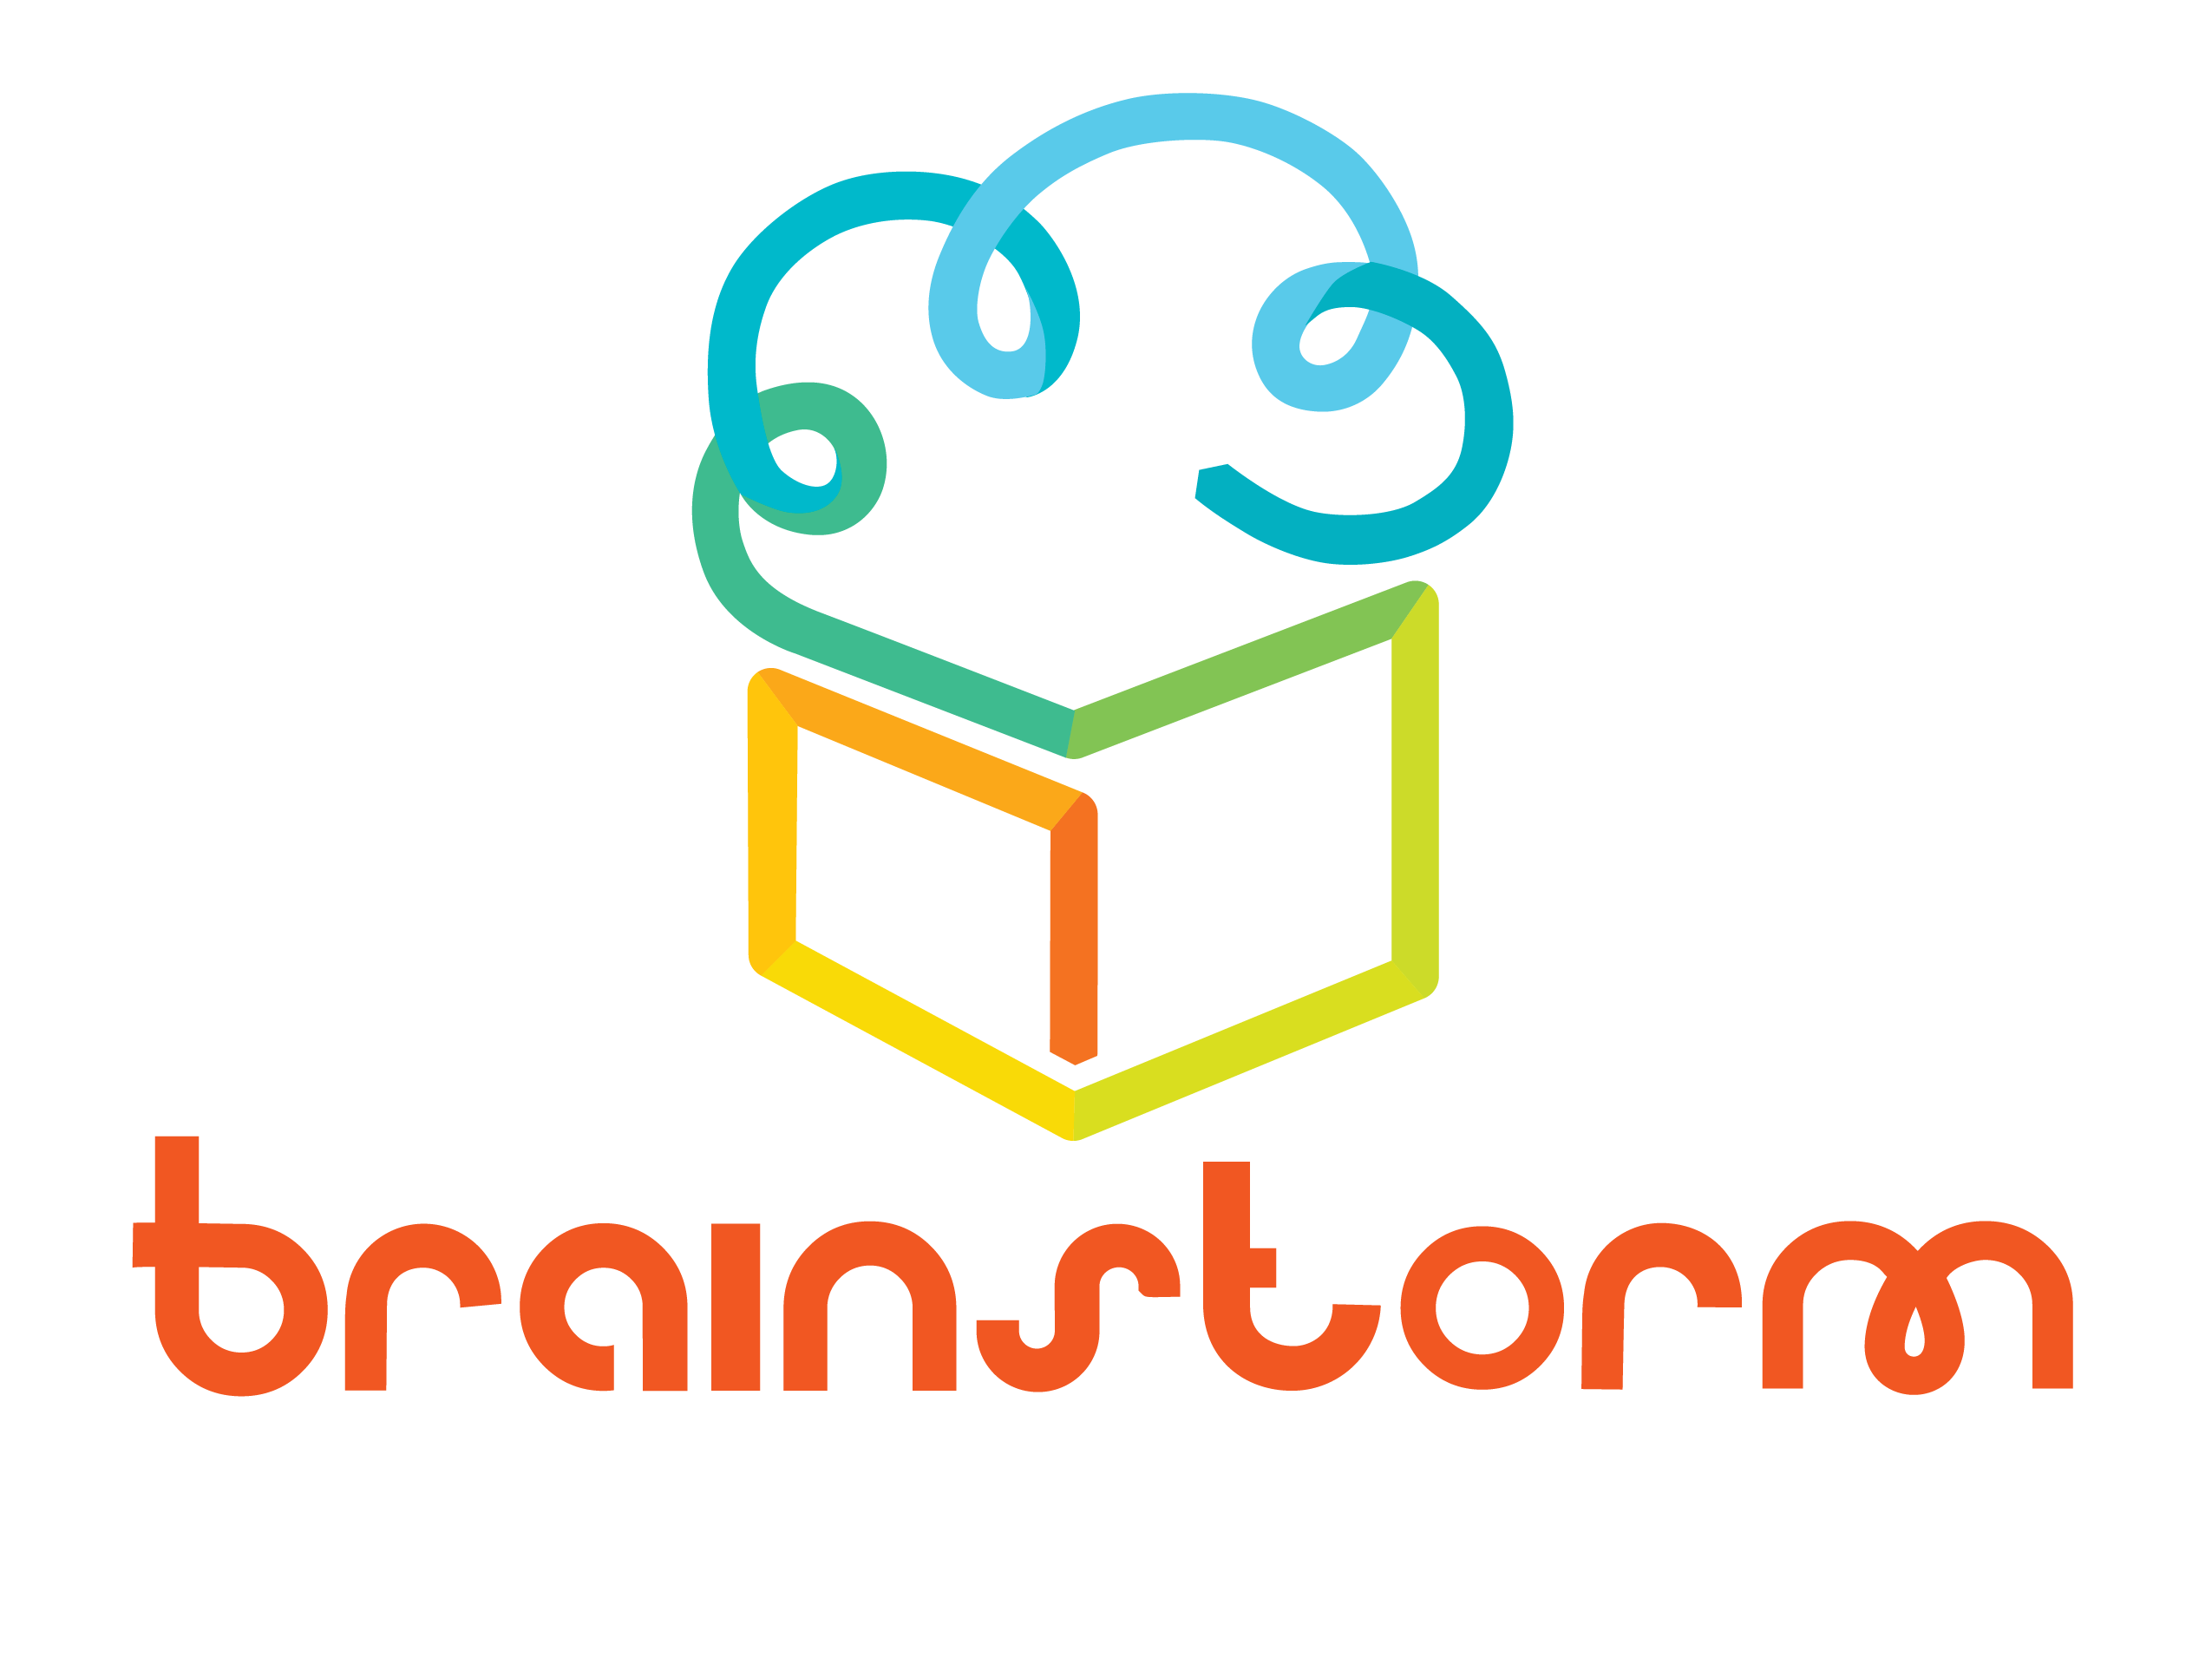 Brainstorm Creative Group Logo